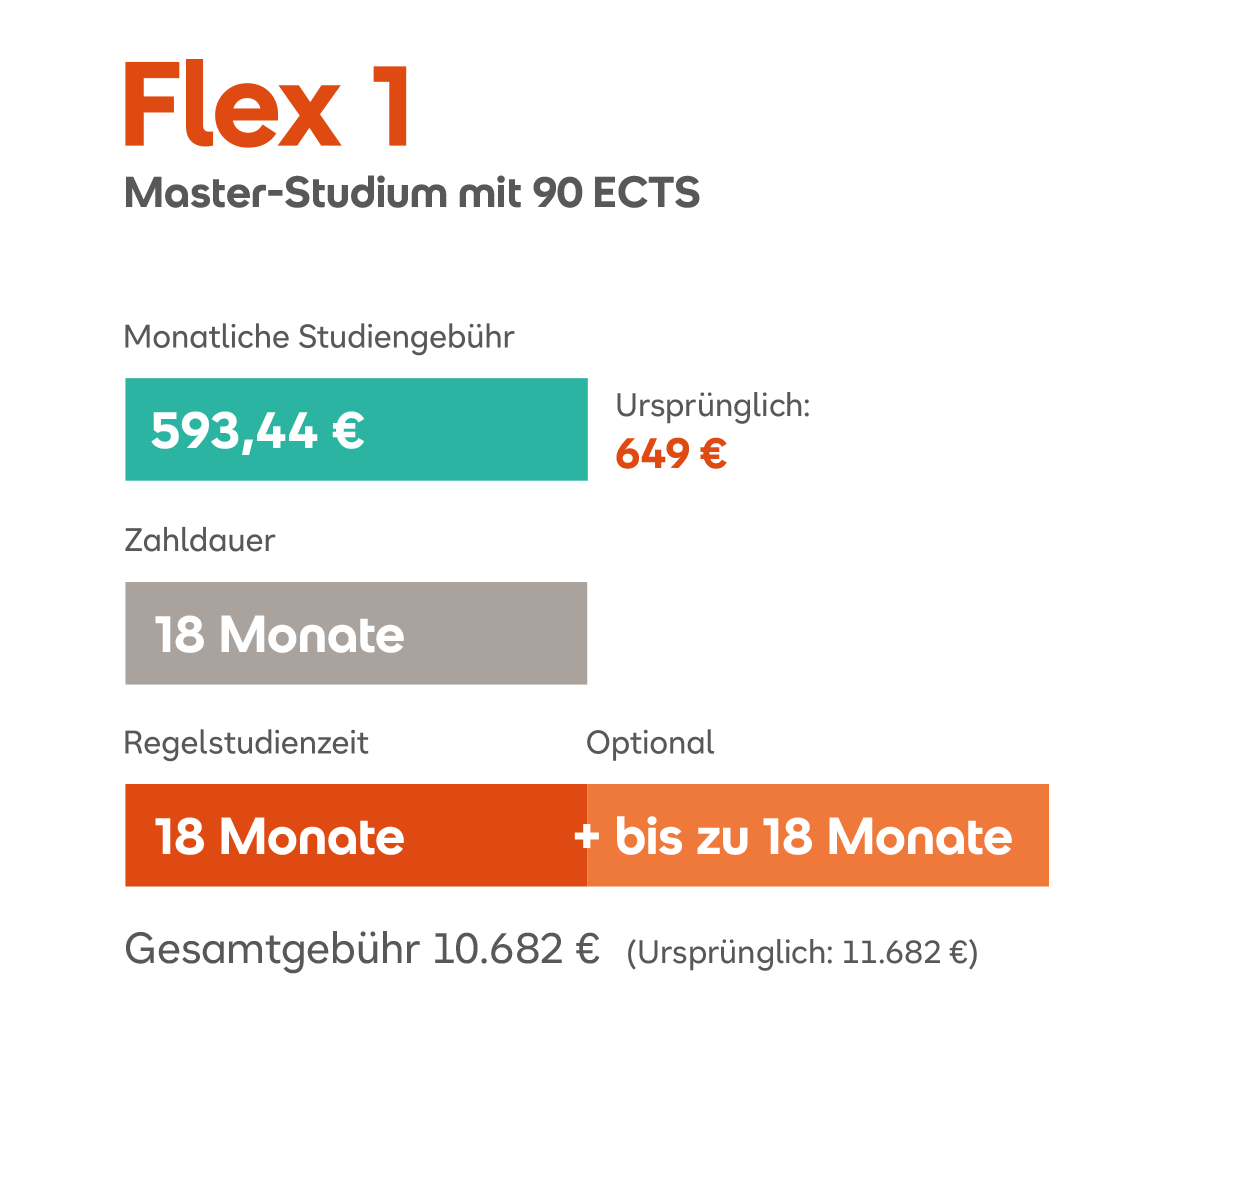 Flex 1 Master